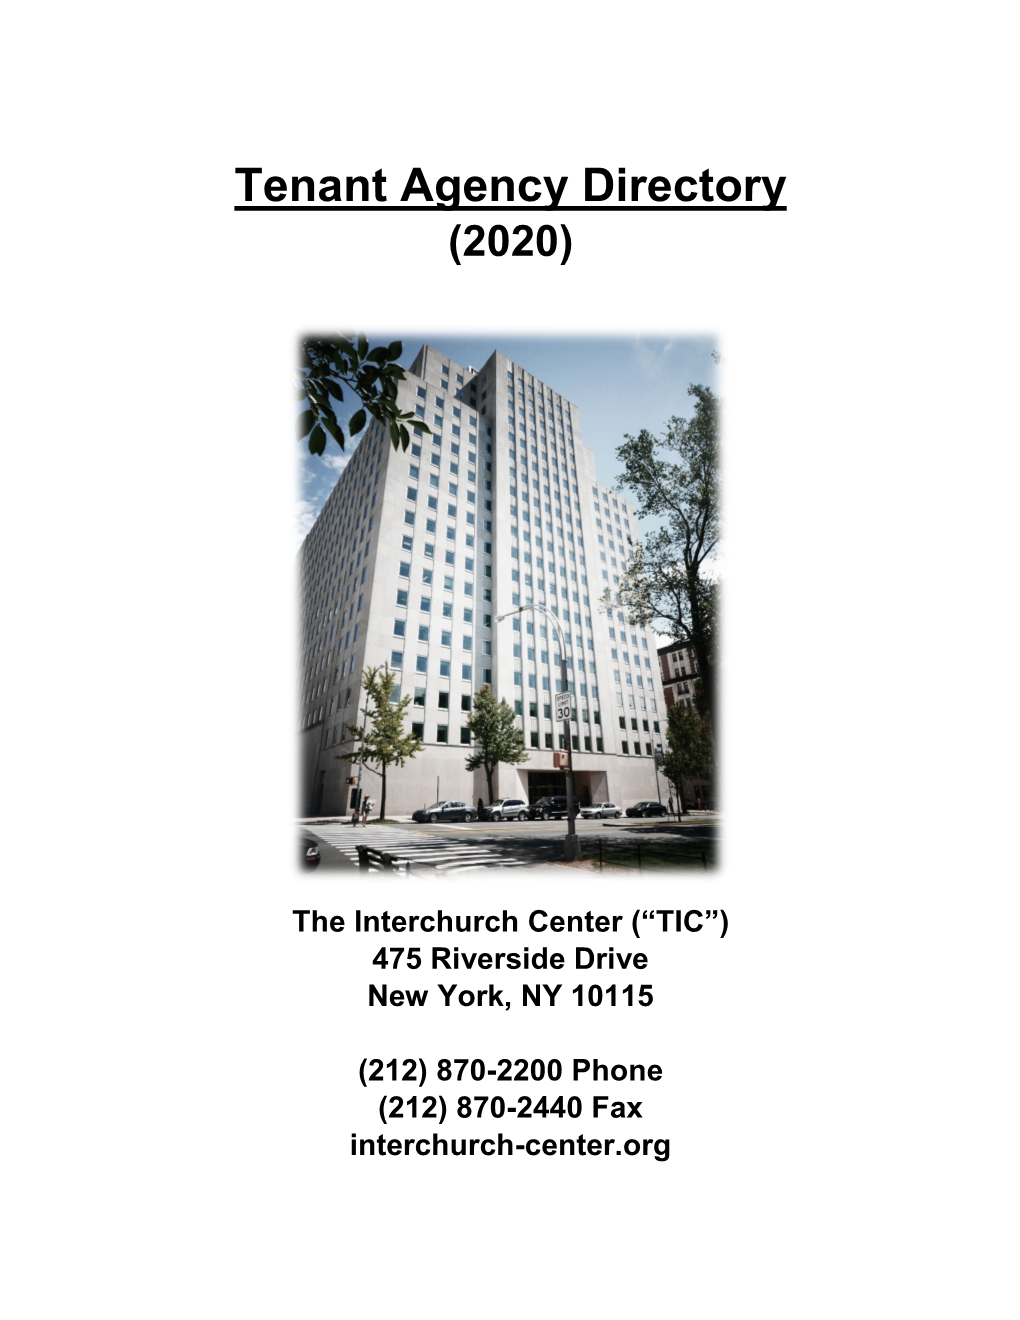 Tenant Agency Directory (2020)